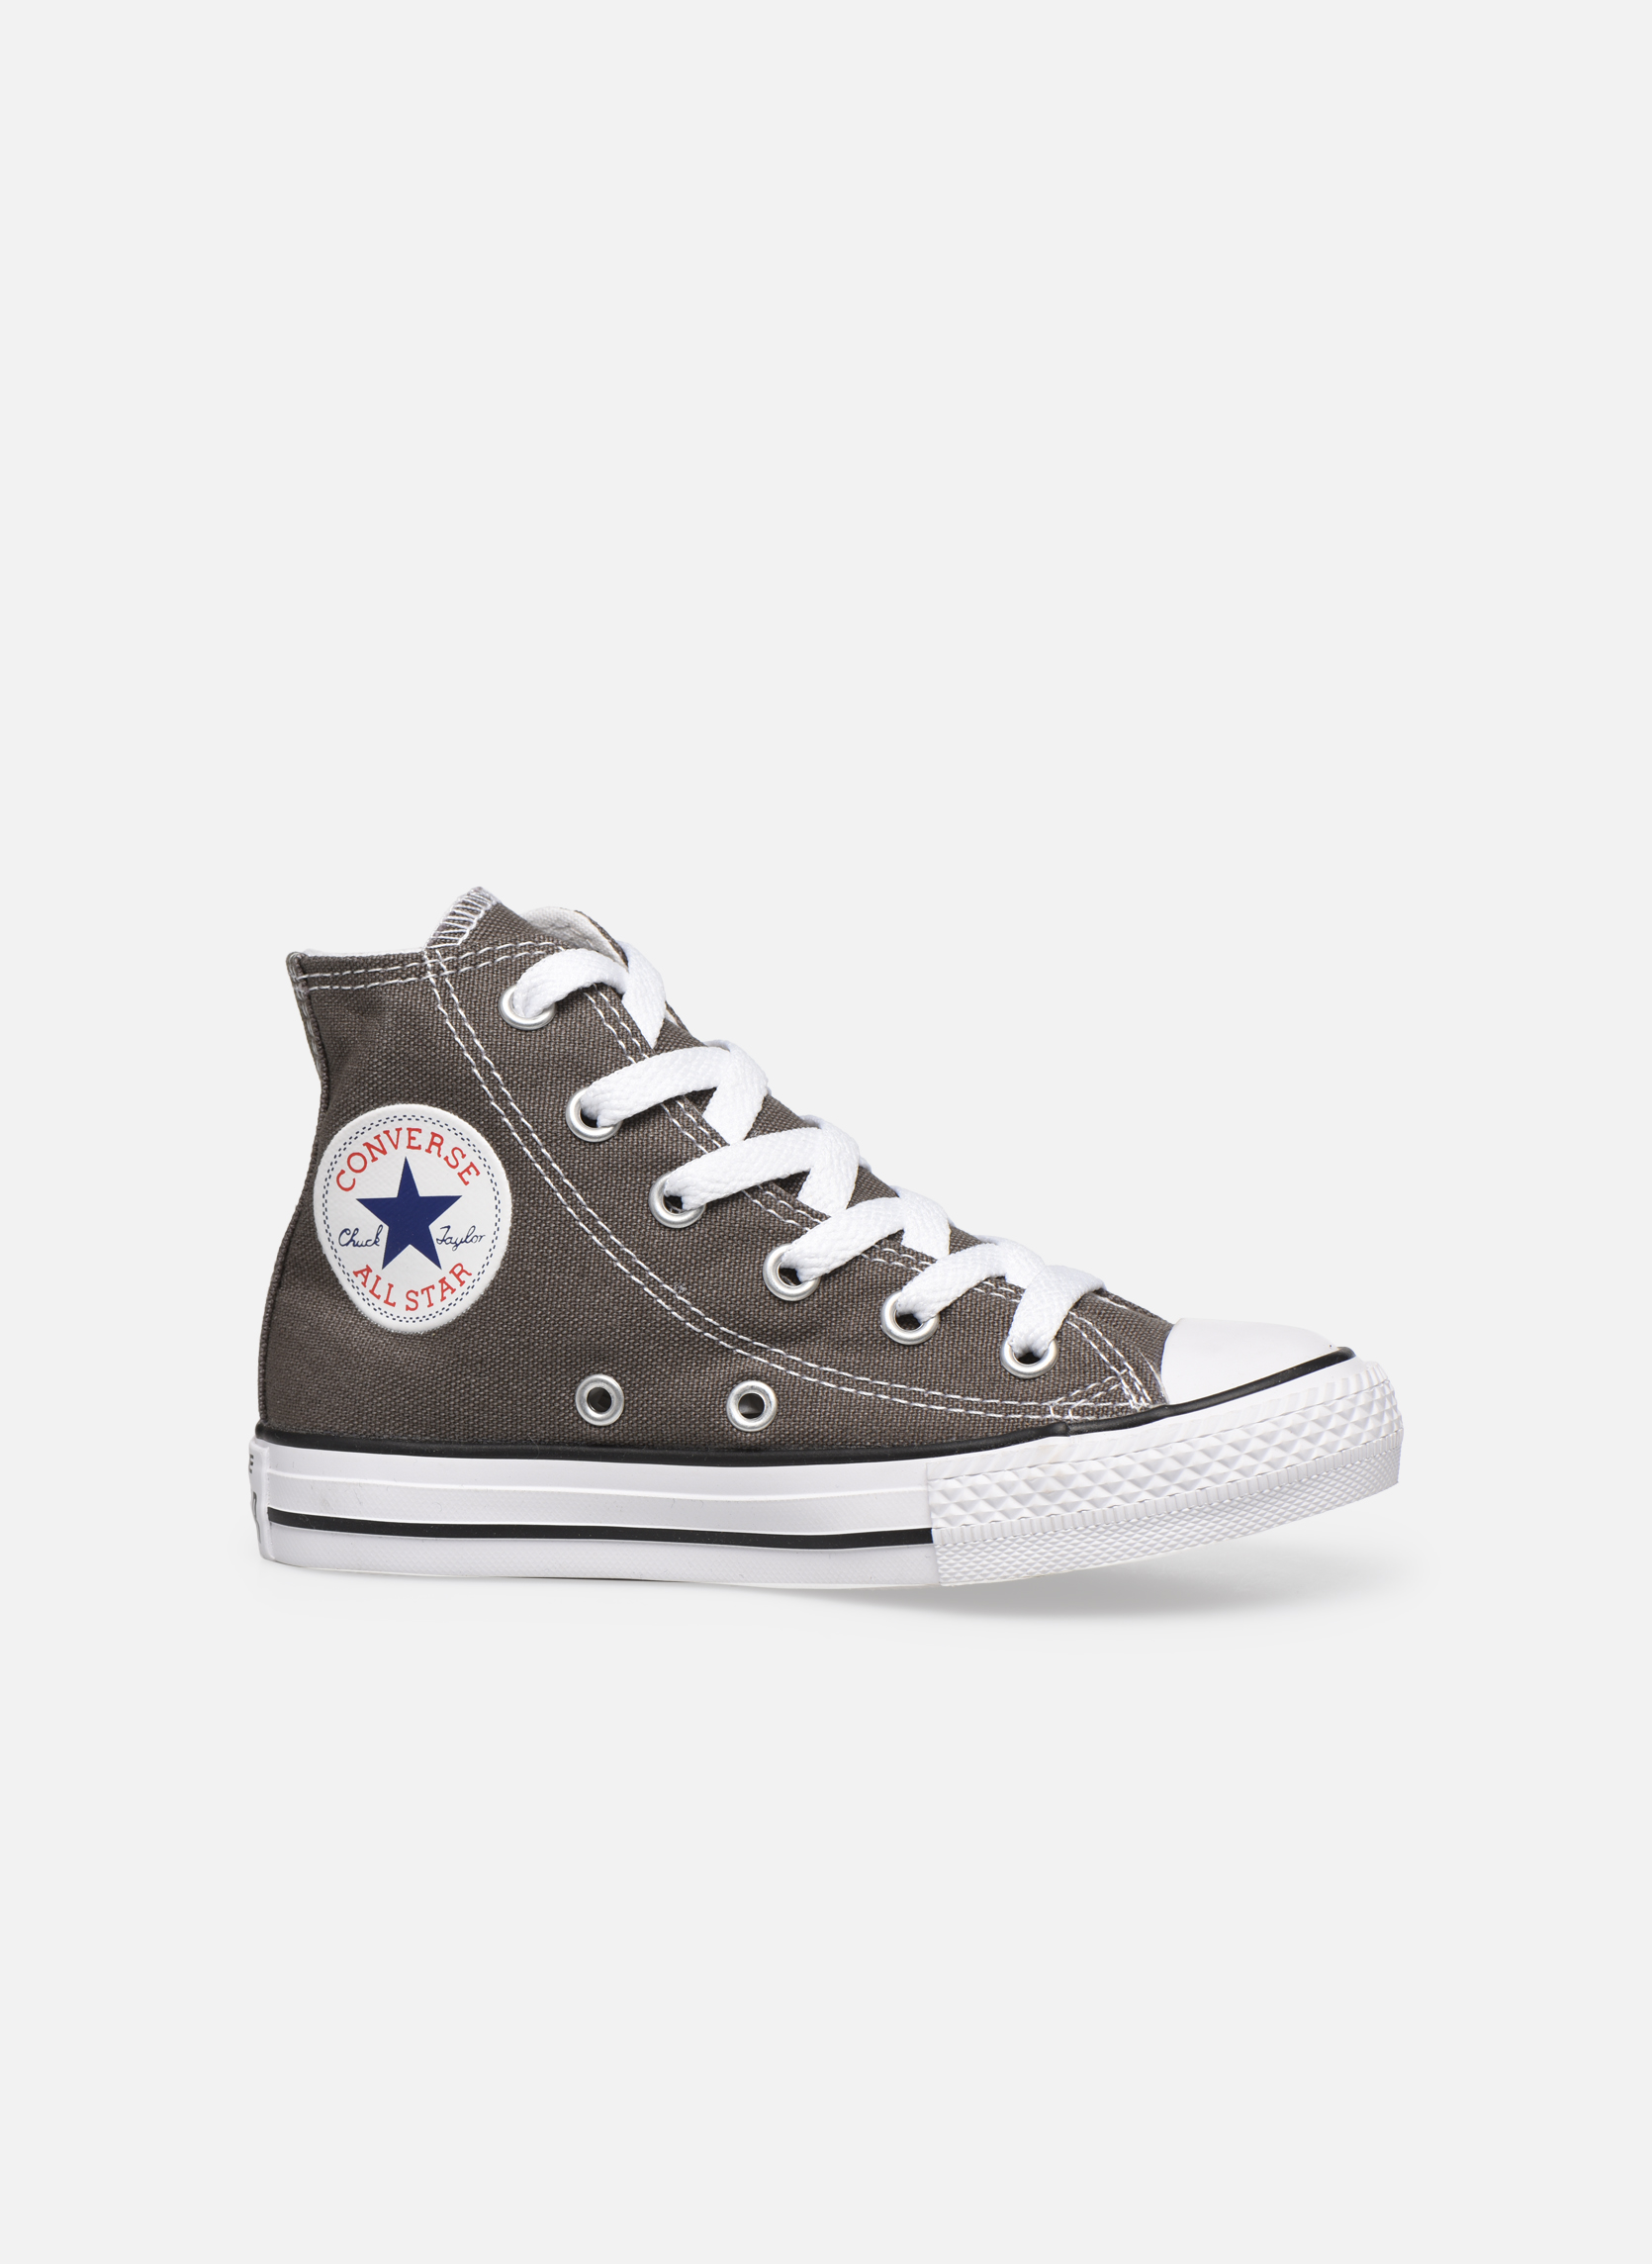 Bambino Converse Chuck Taylor All Star Sp Hi Sneakers Grigio | eBay